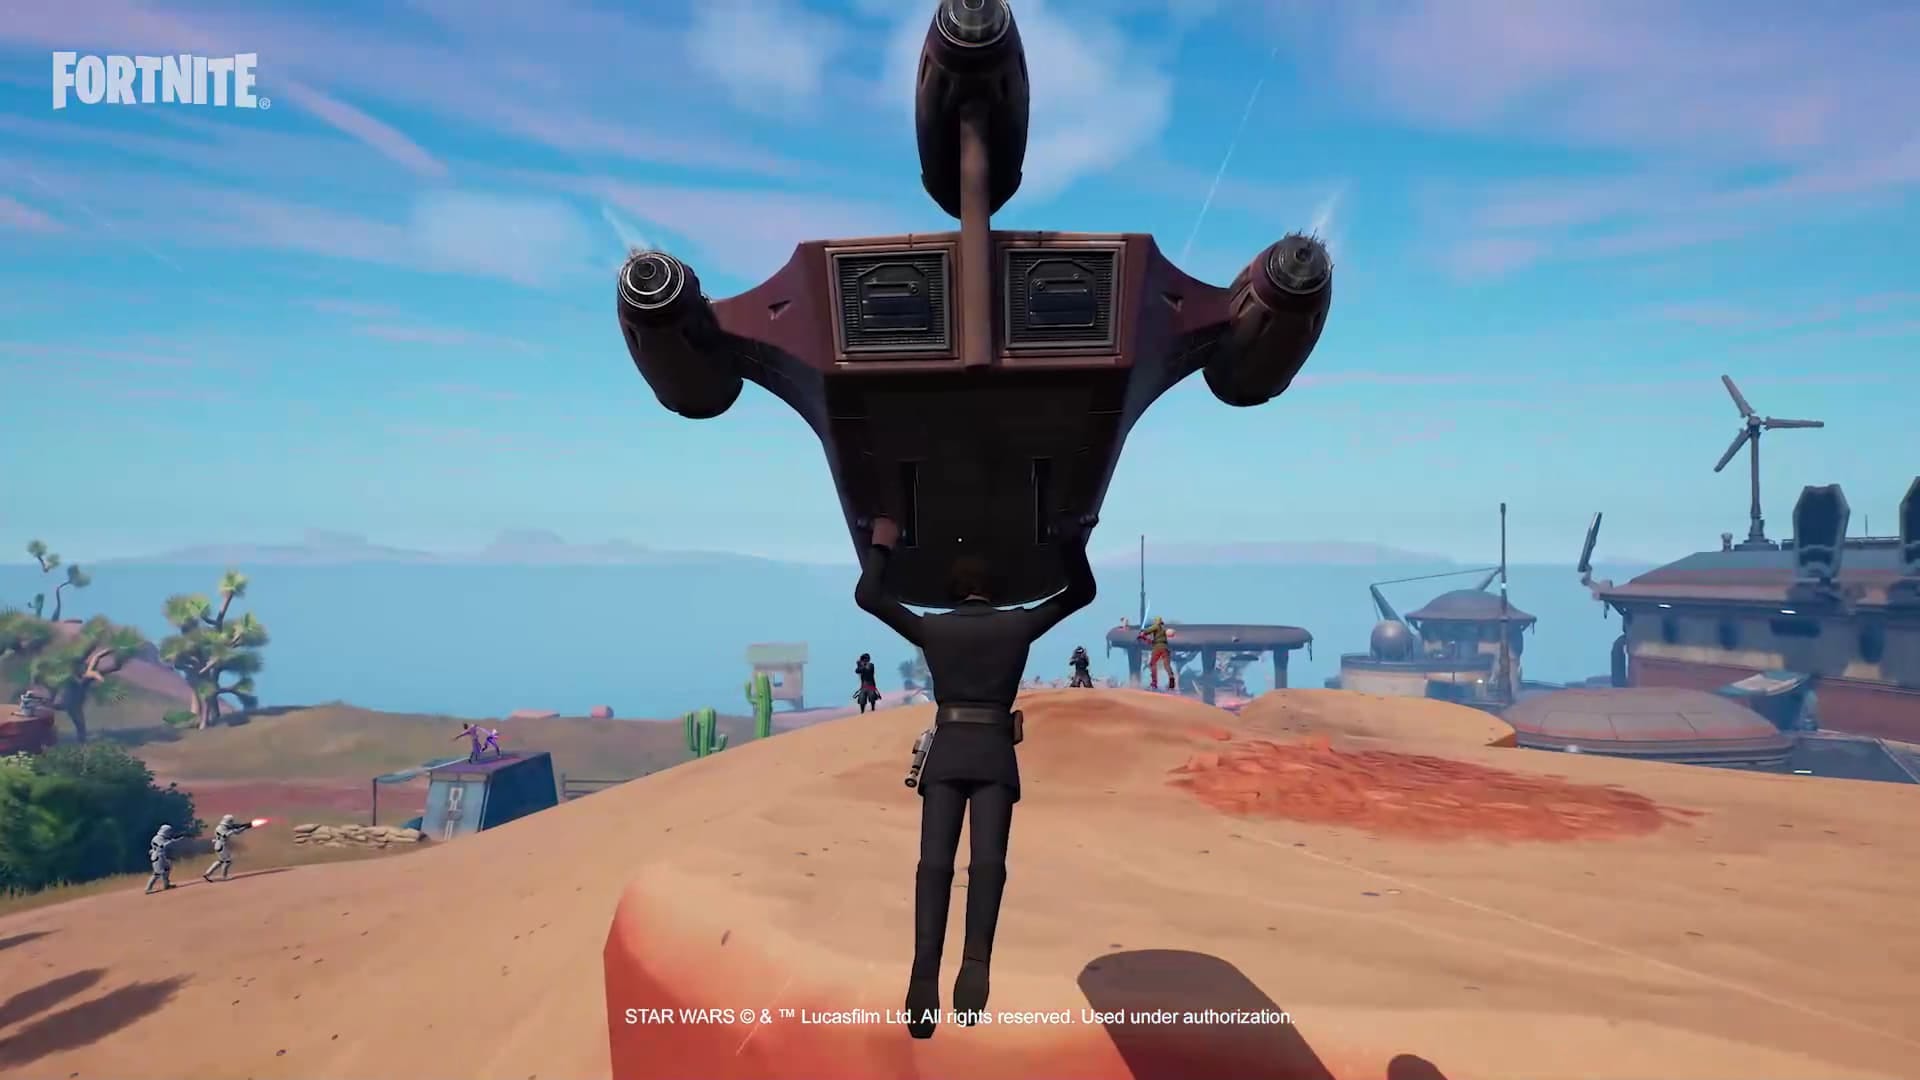 Screenshot from Fortnite Skywalker Week where we see luke dropping in on the enemies from above